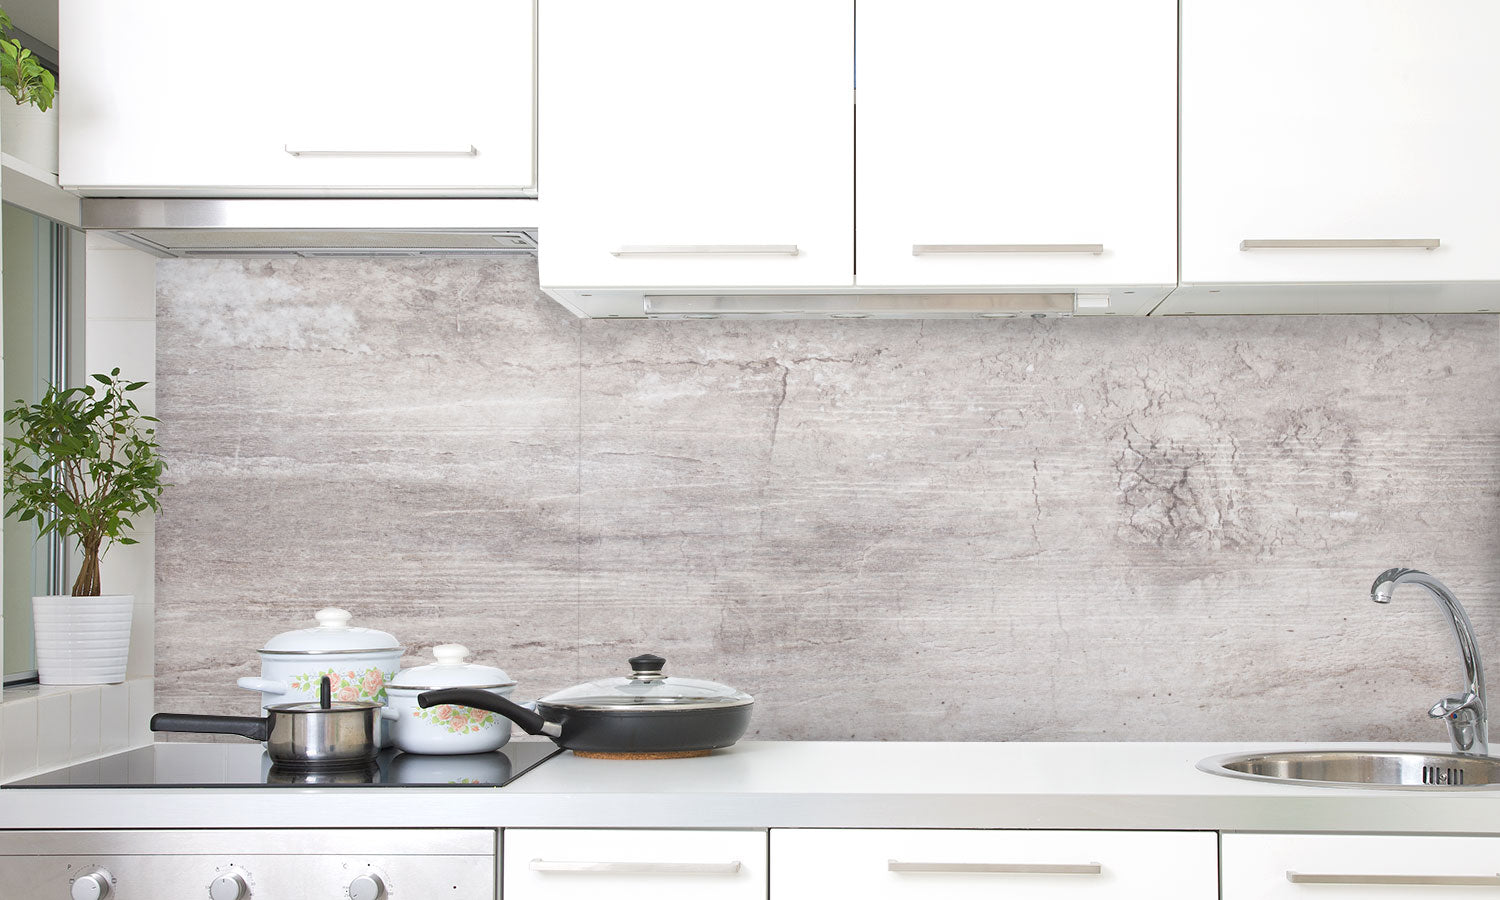 Paneli za kuhinje White Stone wall -  Stakleni / PVC ploče / Pleksiglas -  sa printom za kuhinju, Zidne obloge PKU067